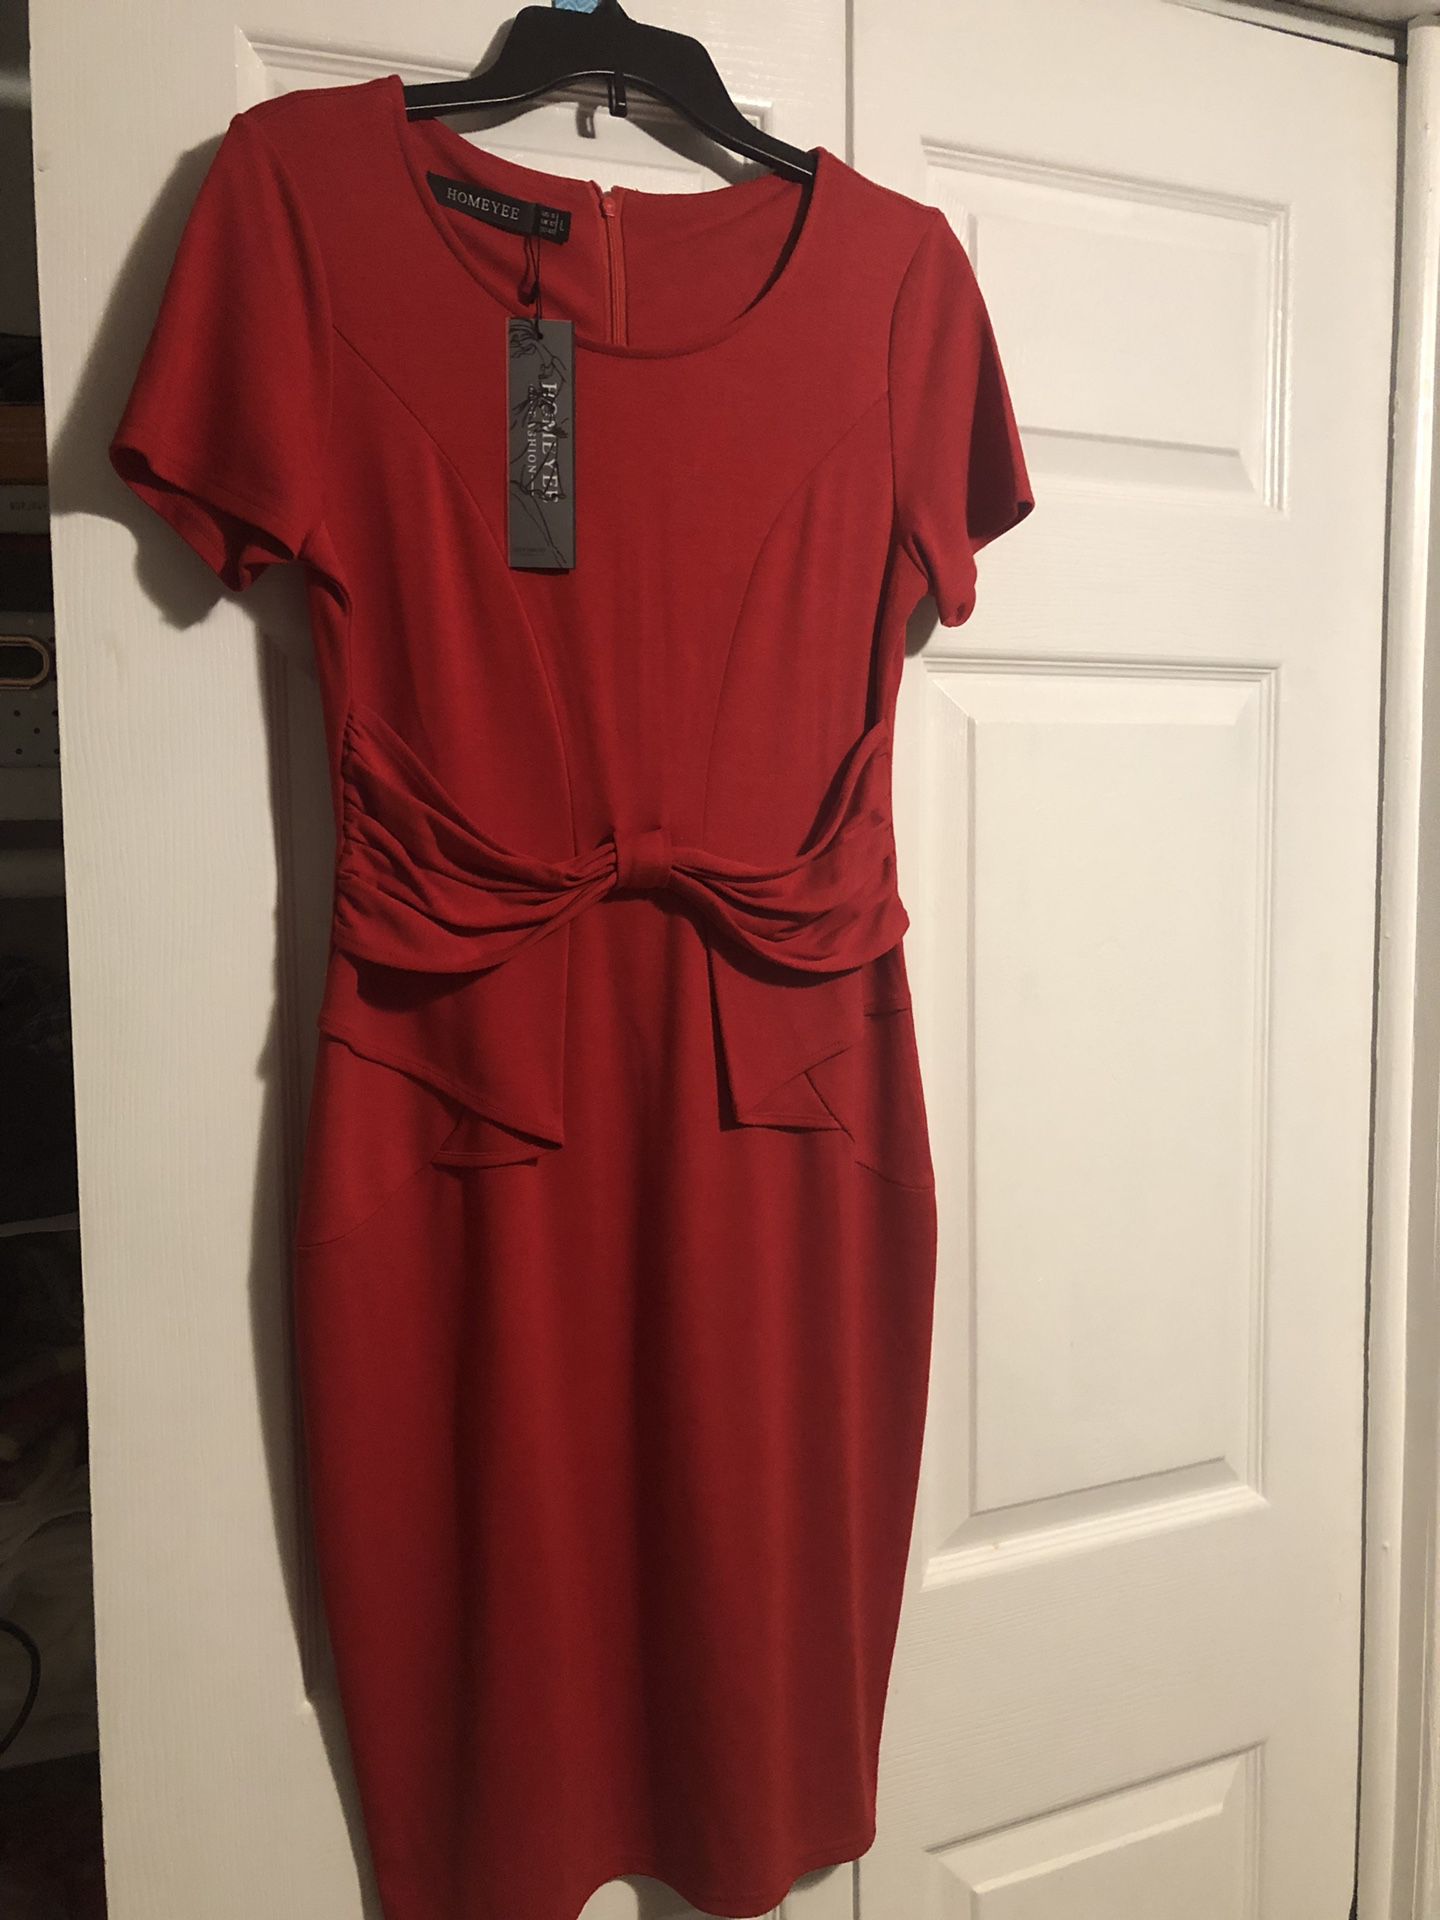 New red dress